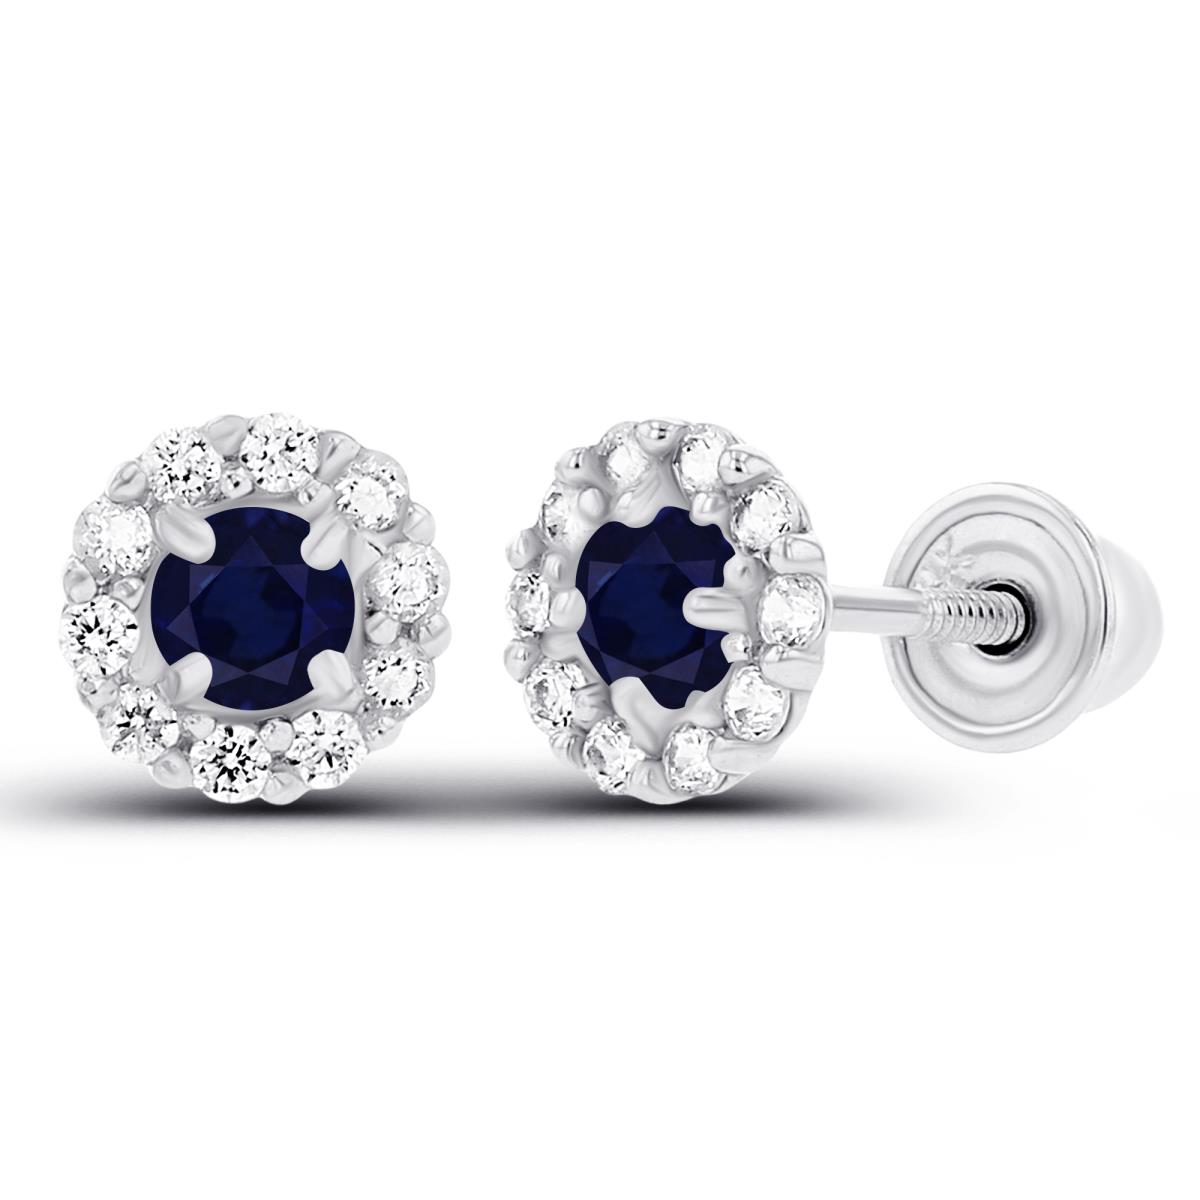 14K White Gold 2.5mm Sapphire & 1mm Created White Sapphire Flower Screwback Earrings